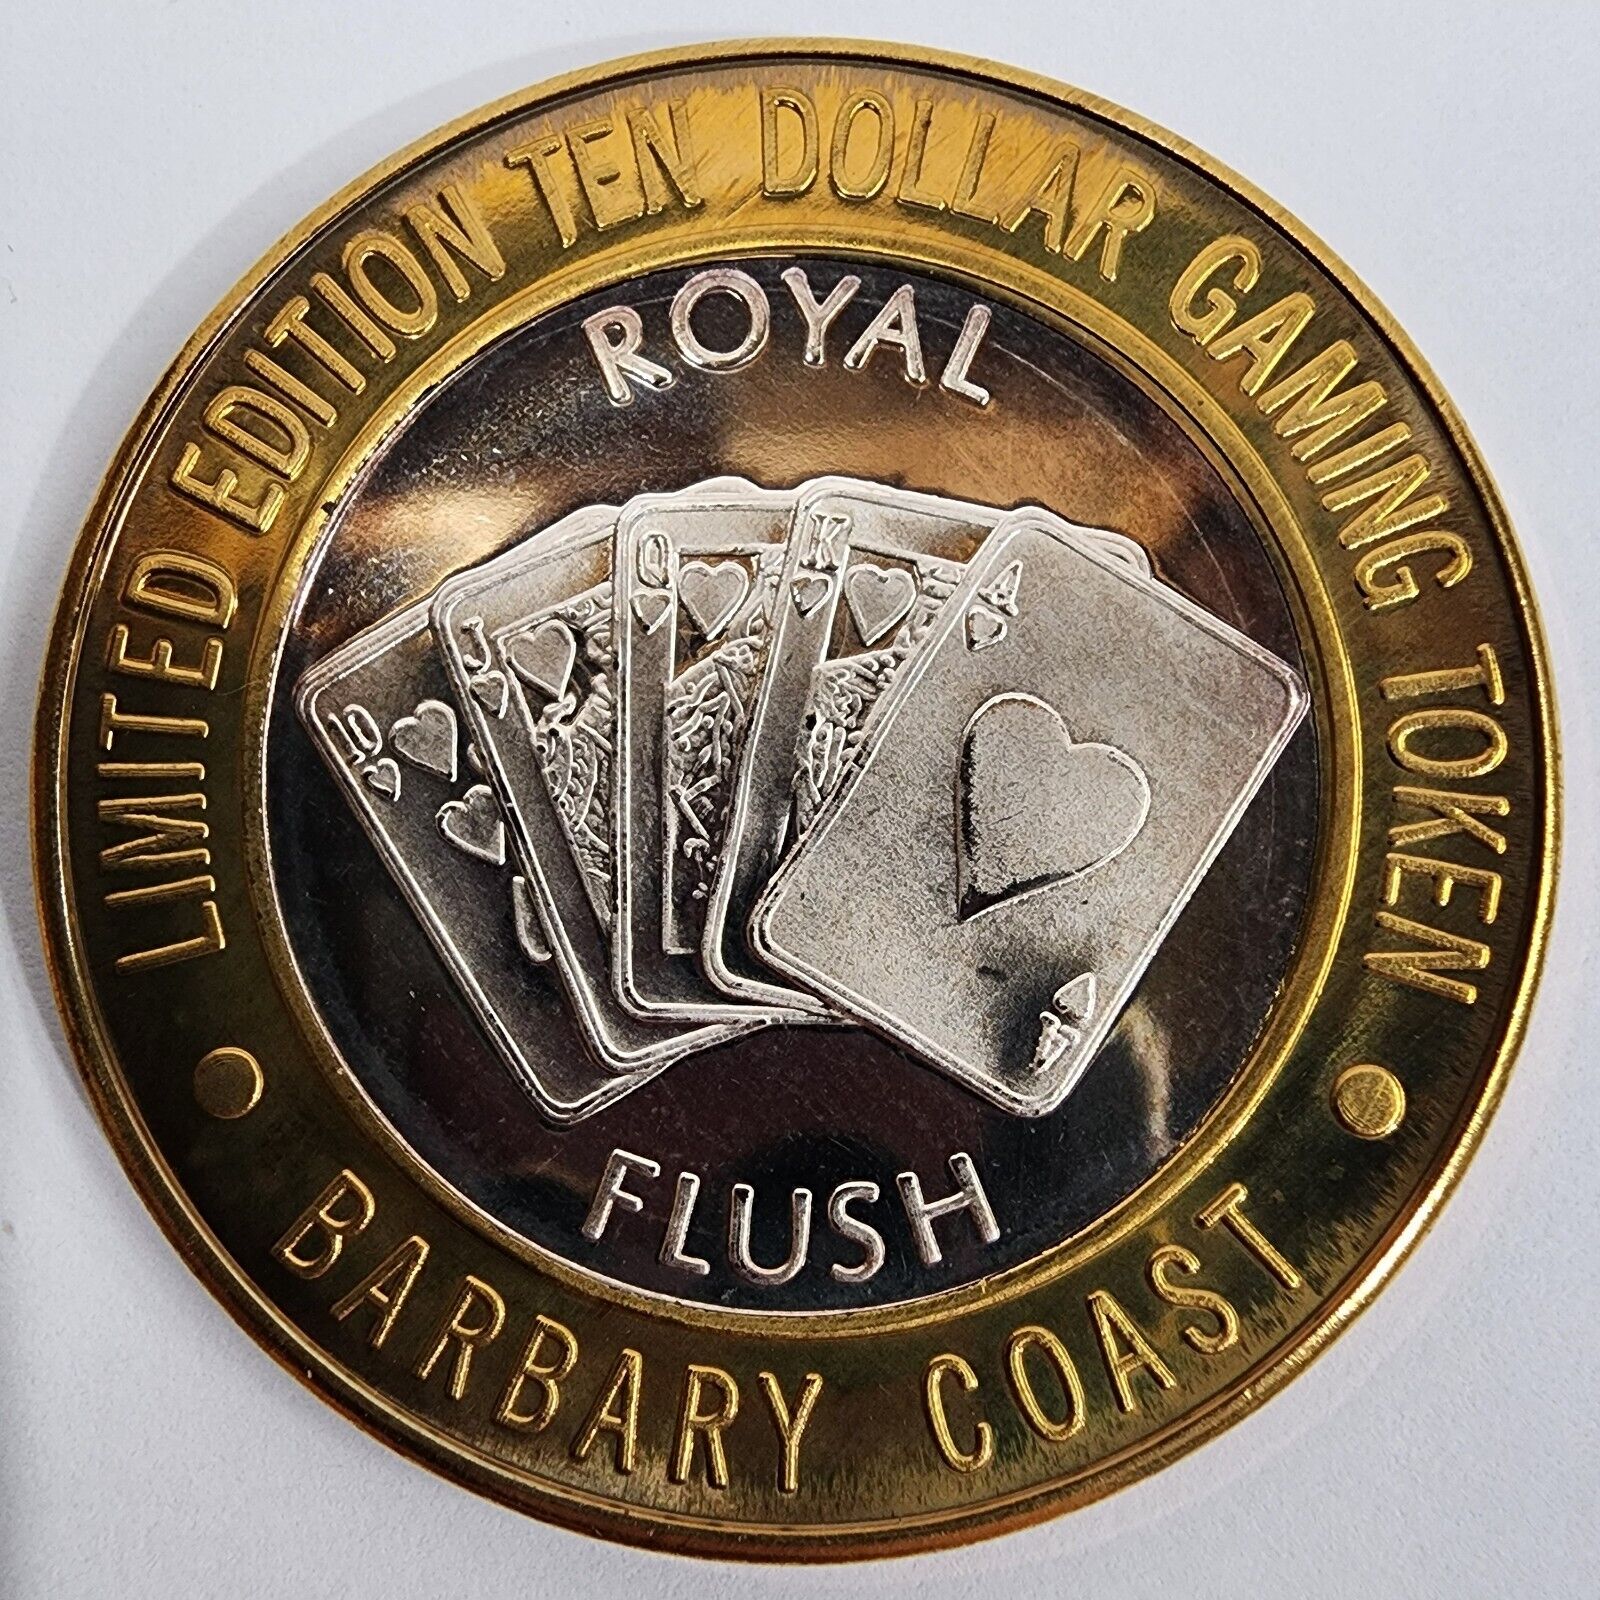 Barbary Coast $10 999 Fine Silver Royal Flush Ltd. Edition Gaming Casino Token